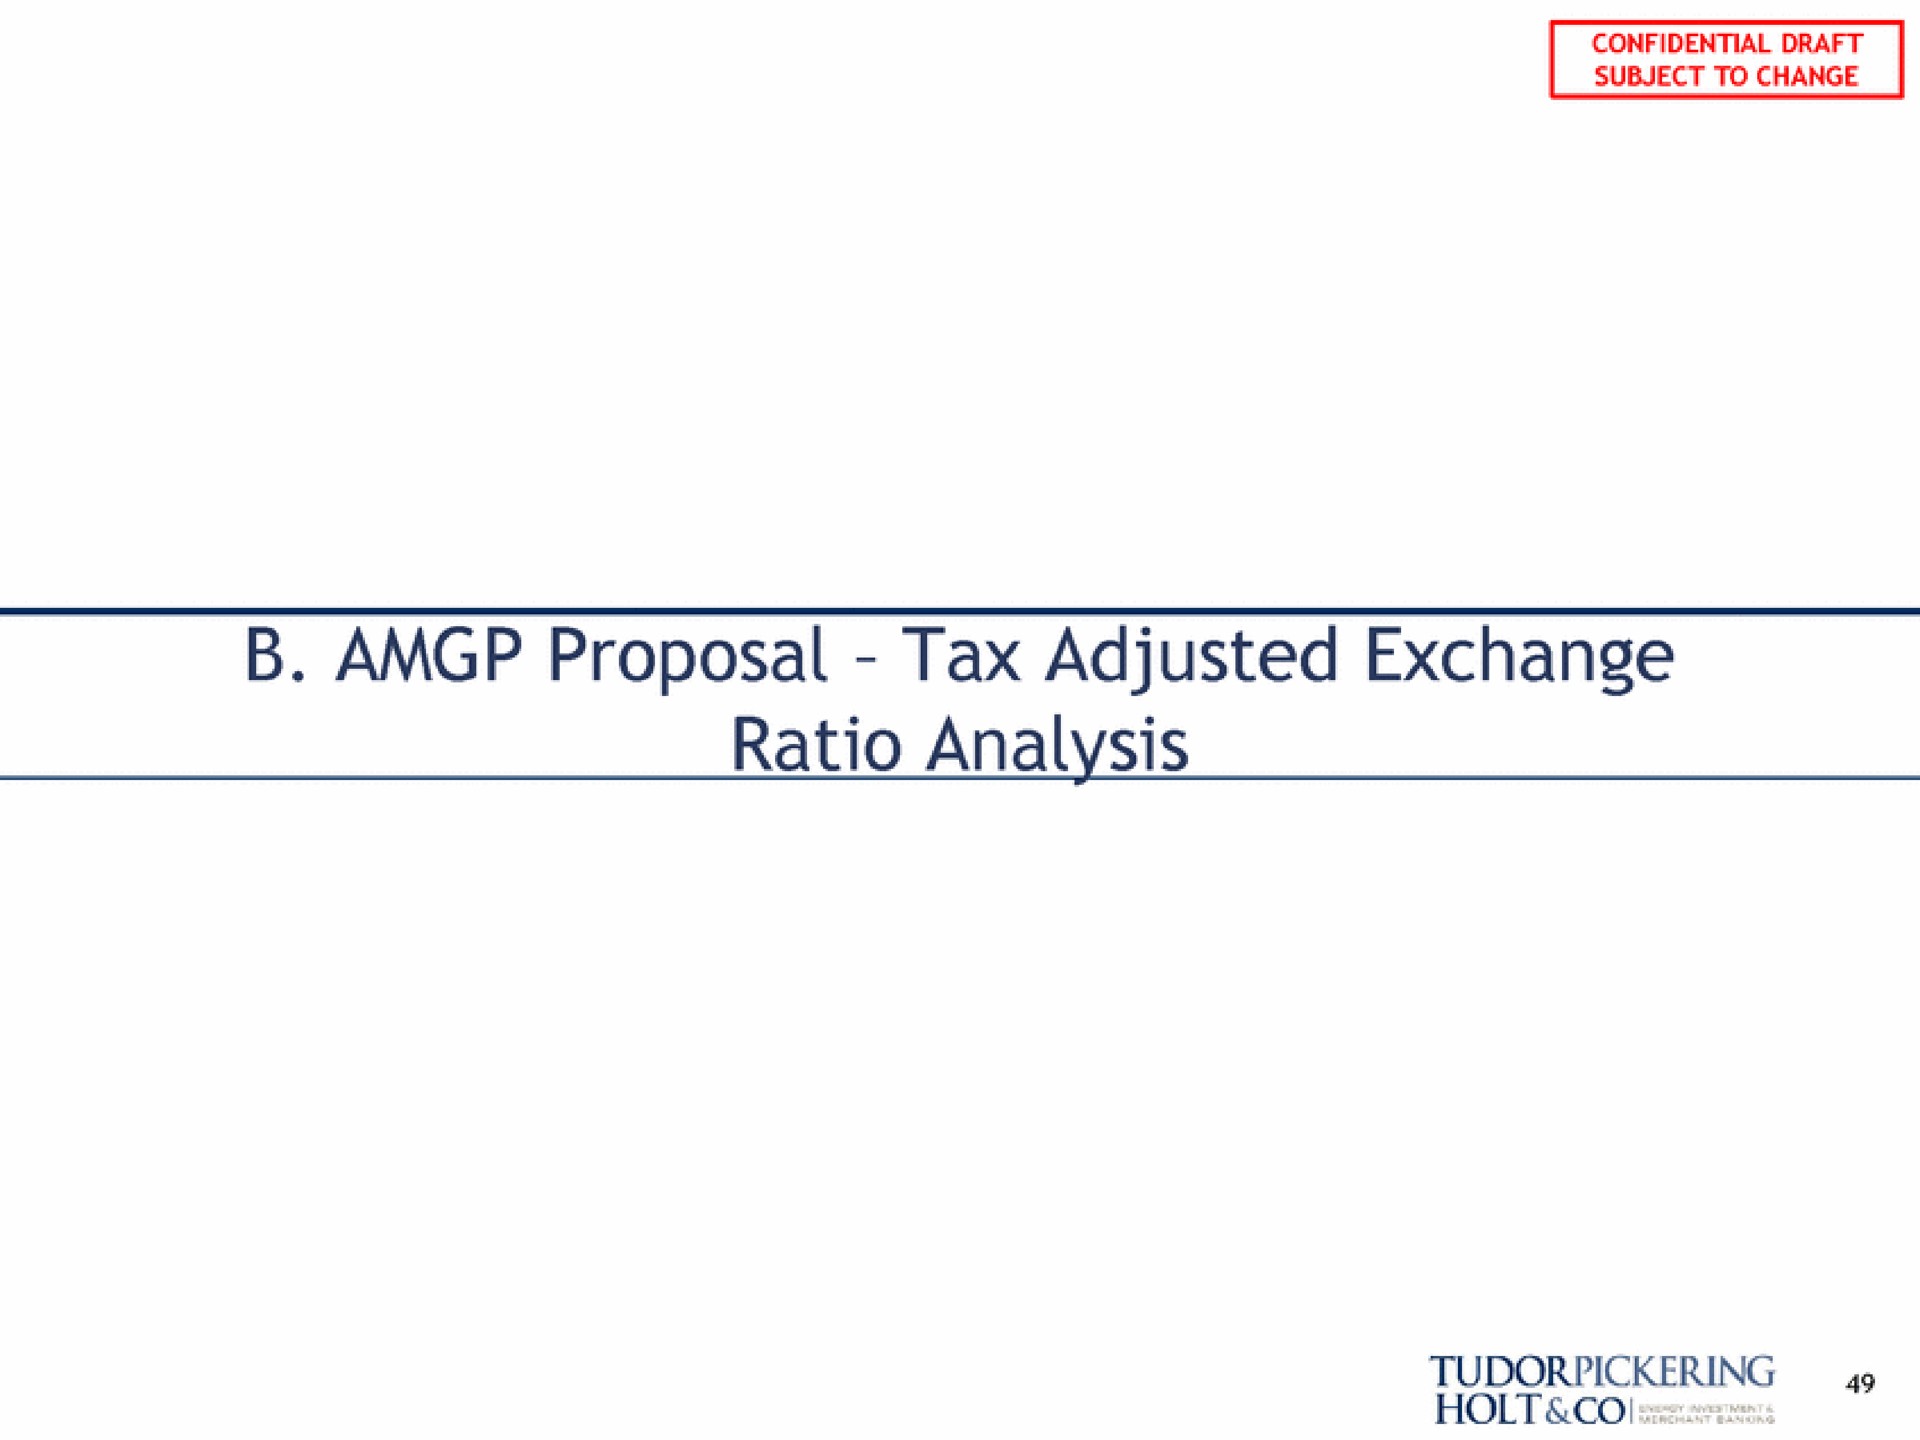 proposal tax adjusted exchange ratio analysis | Tudor, Pickering, Holt & Co